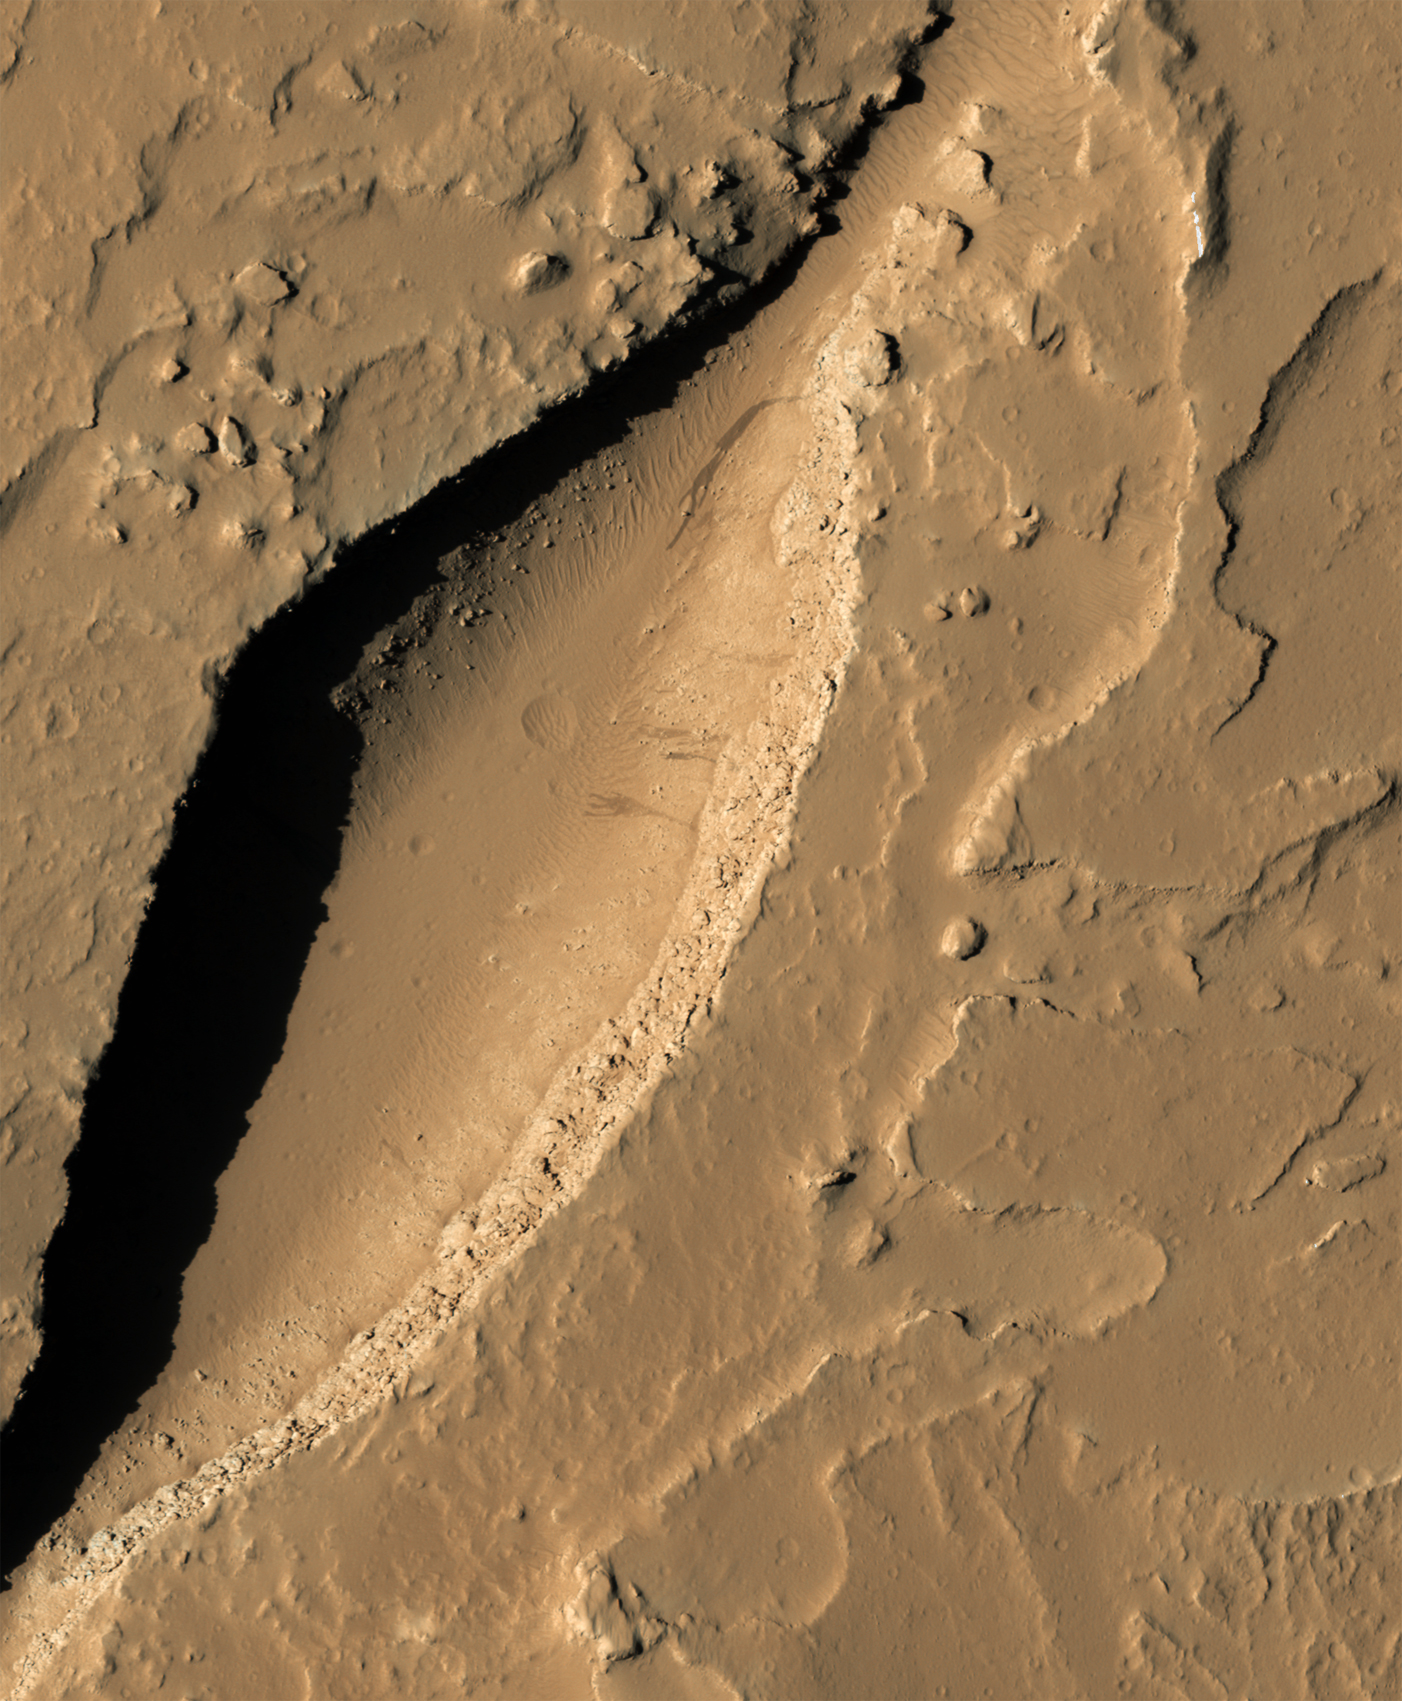 Большой поверхности а также. Гора Олимп на Марсе. Маринер Марс. Вулкан Олимп на Марсе. Долина Маринера на Марсе.